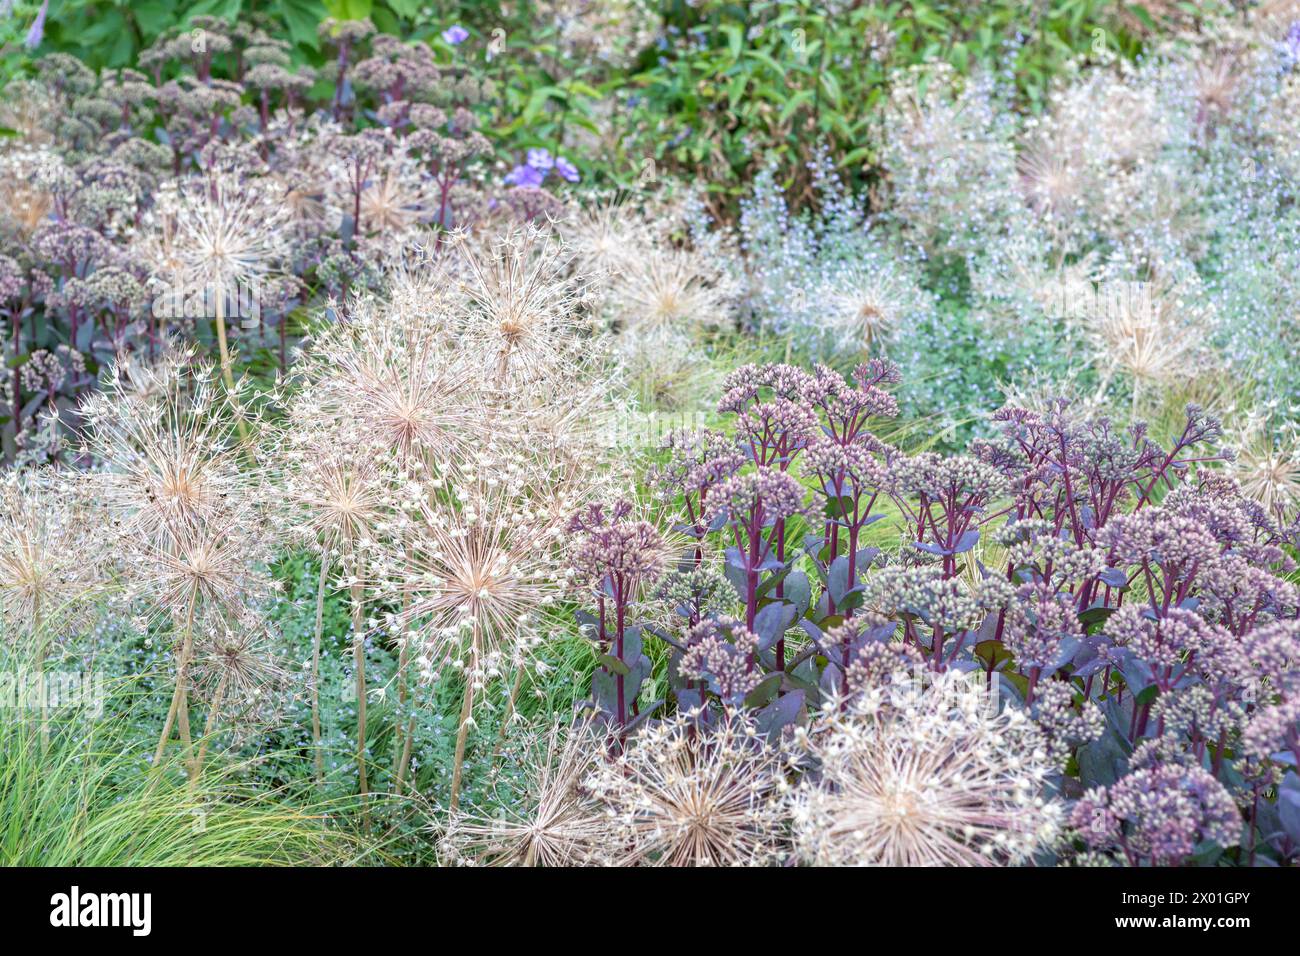 Allium cristophii / Allium christophii (star of Persia) seedheads with Hylotelephium 'Matrona' (sedum / stonecrop) in a flower bed / border scheme Stock Photo